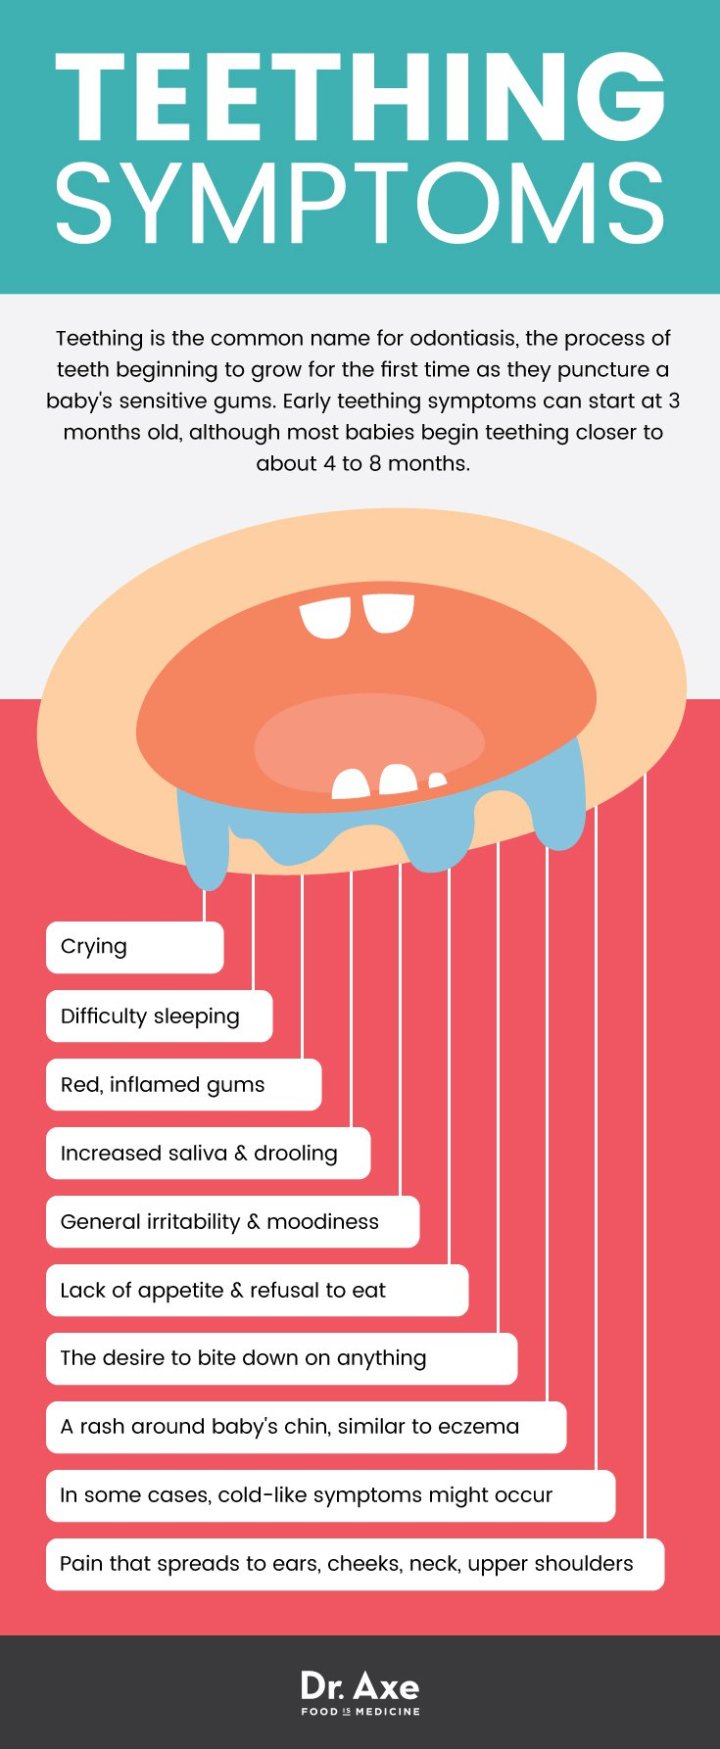 Teething symptoms - Dr. Axe